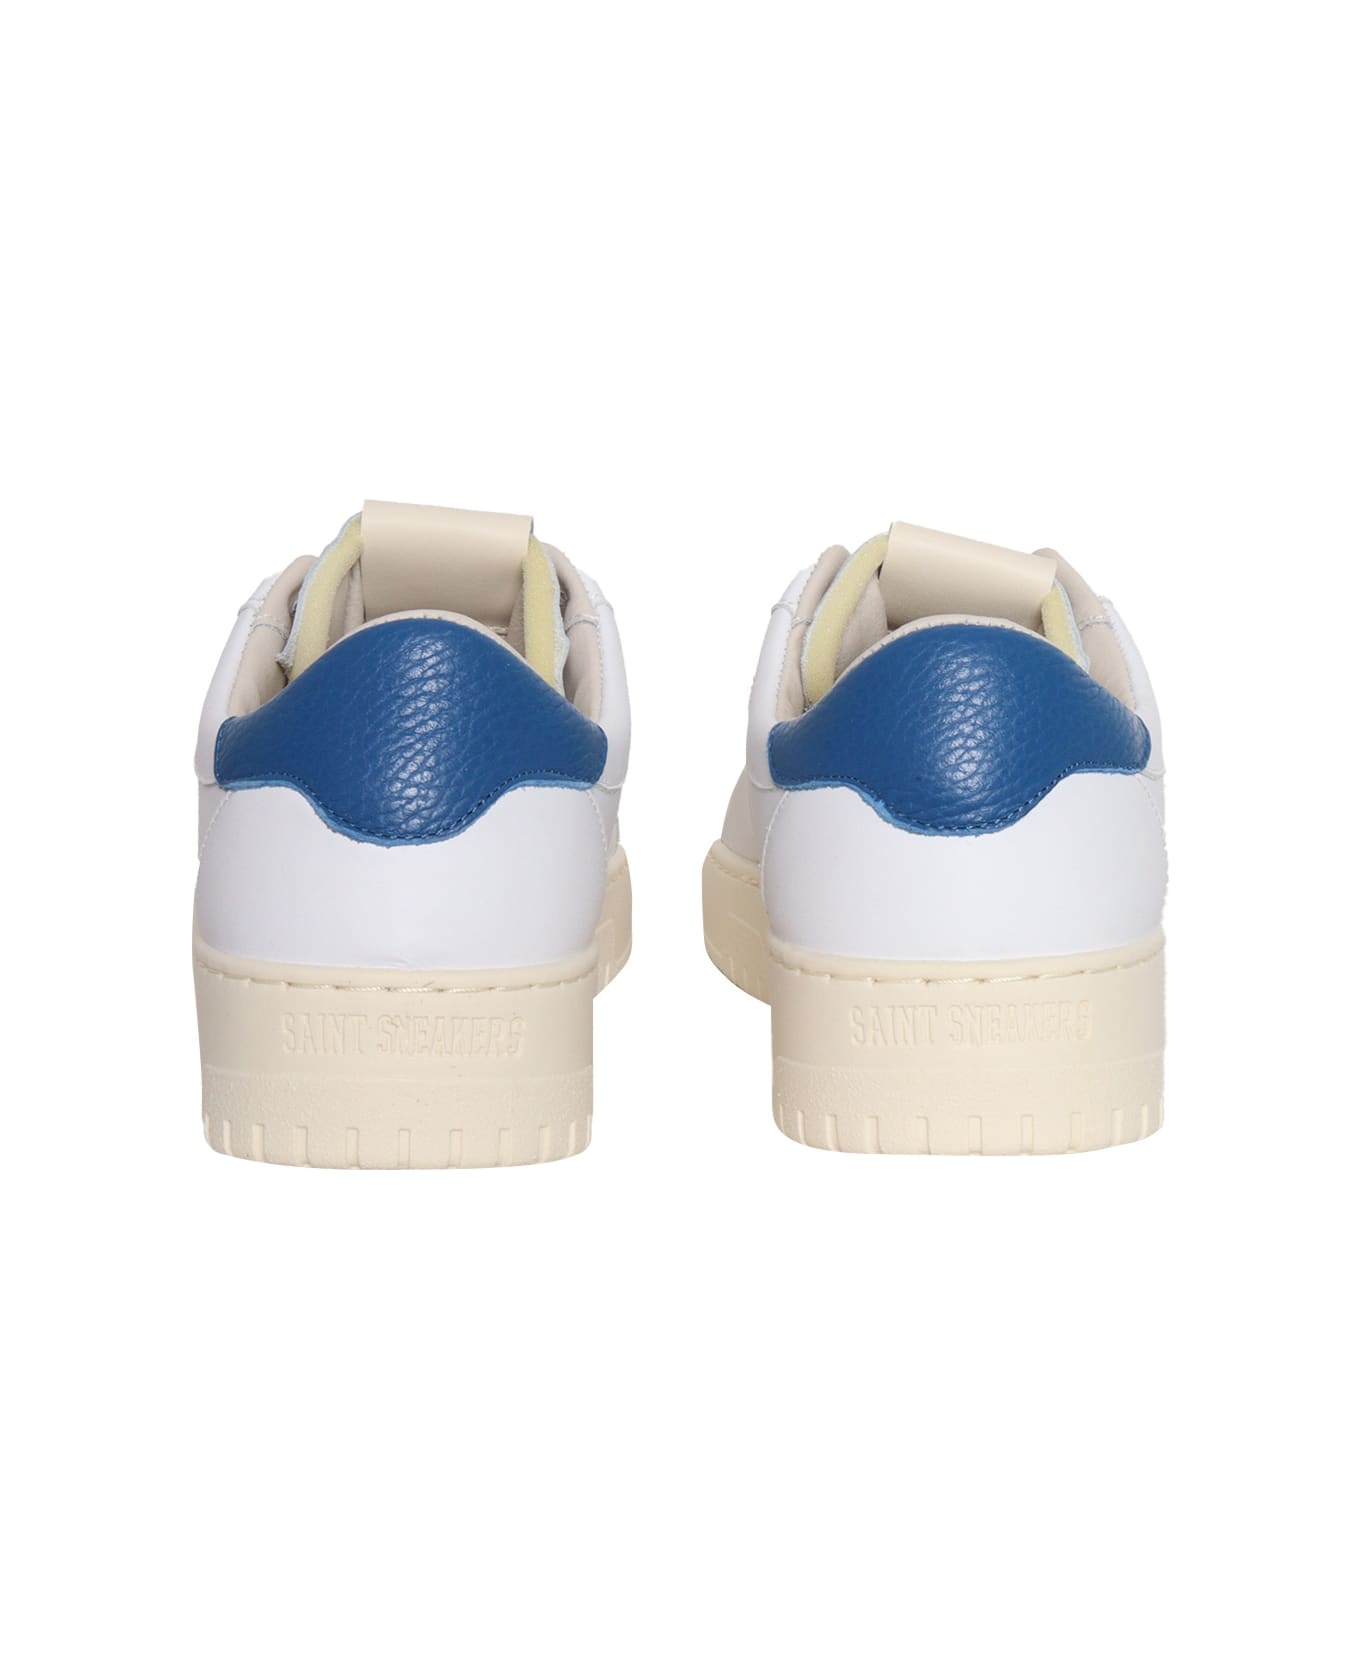 Saint Sneakers White Leather Sneakers - WHITE